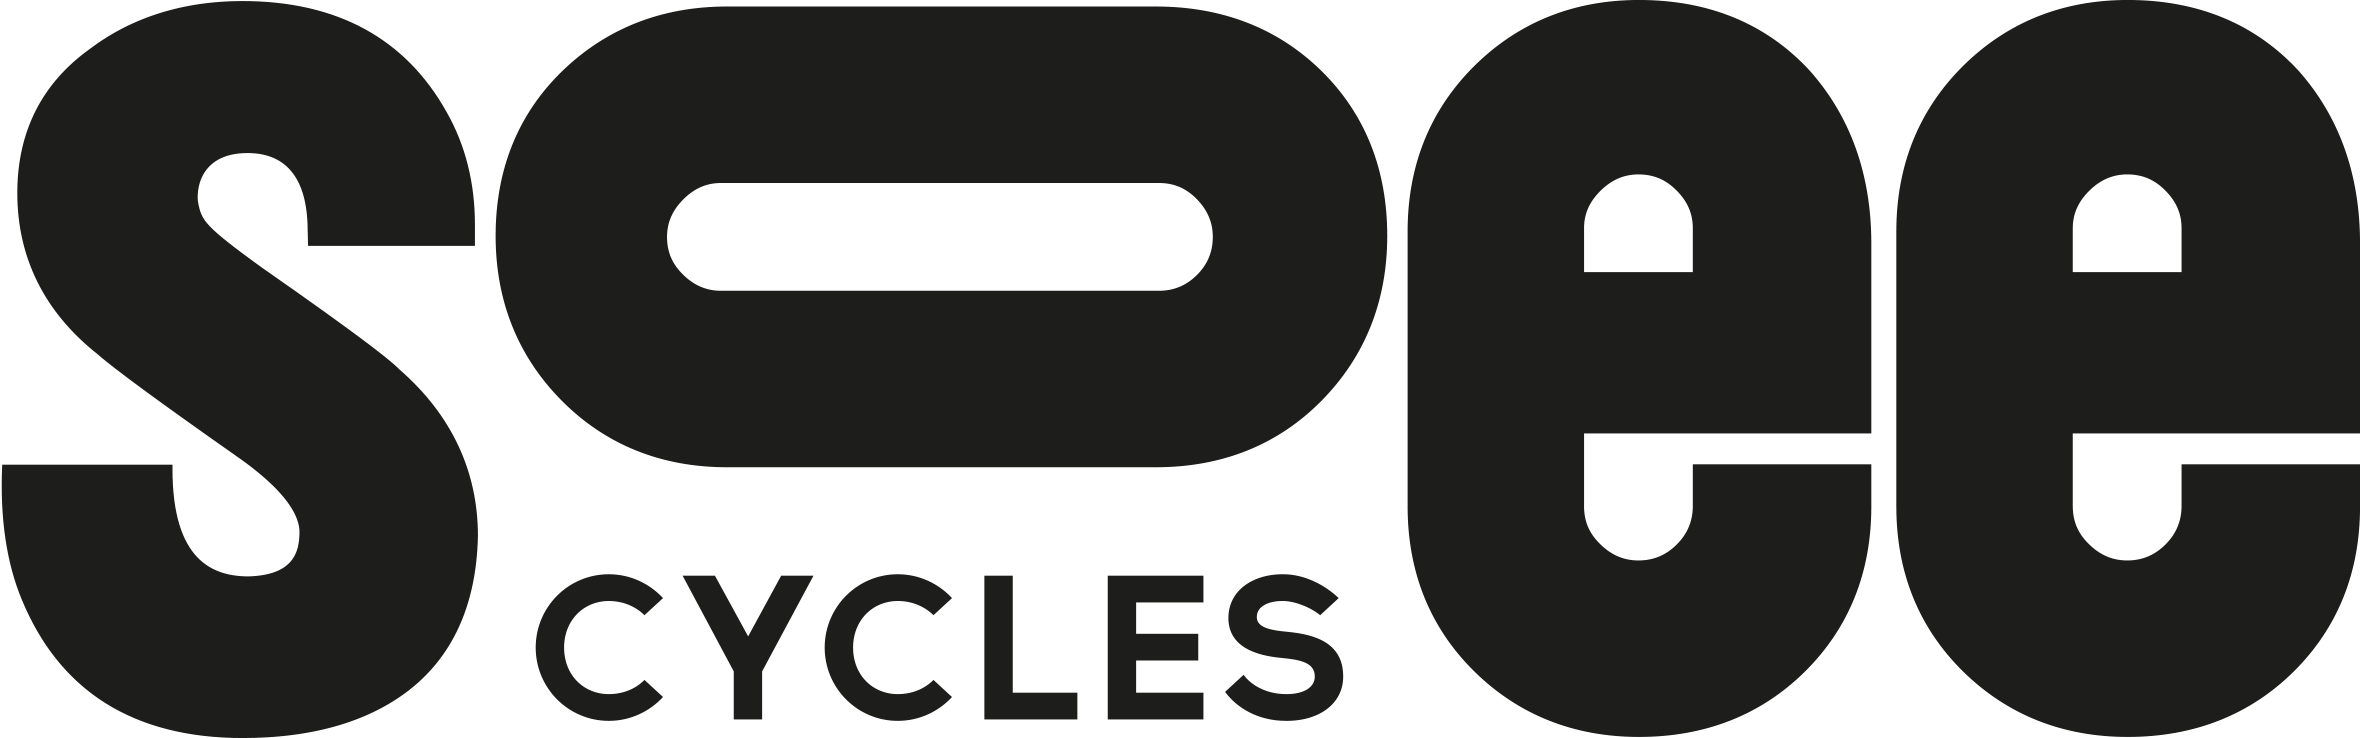 Soee Cycles Logo Final